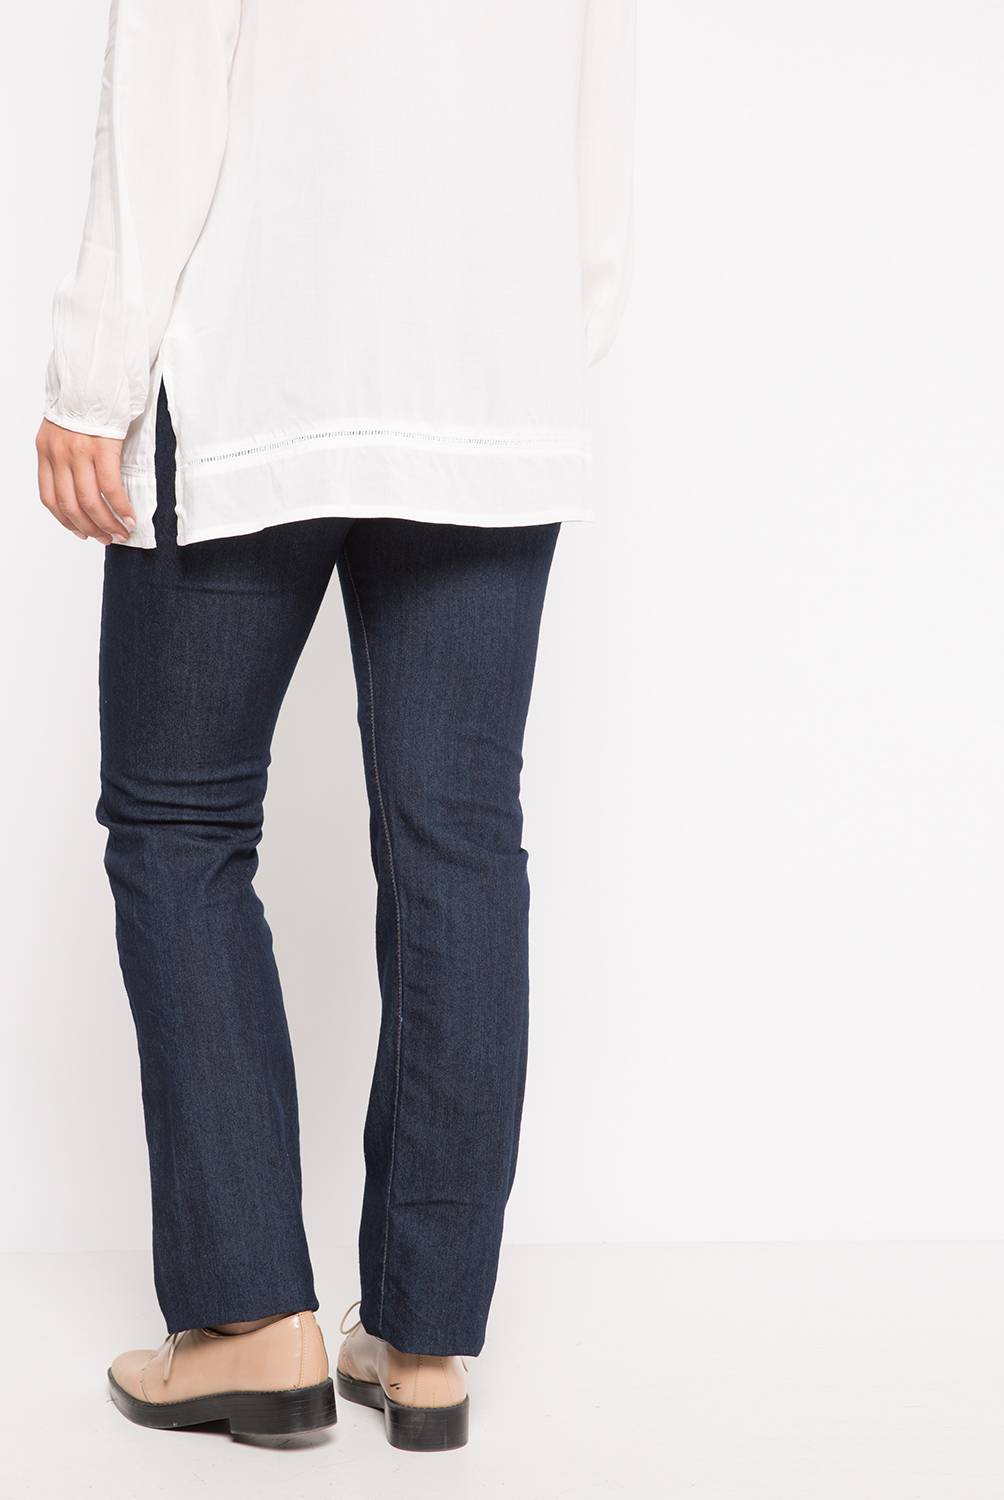 NEWPORT - Newport Jeans Denim Recto Tiro Alto Mujer